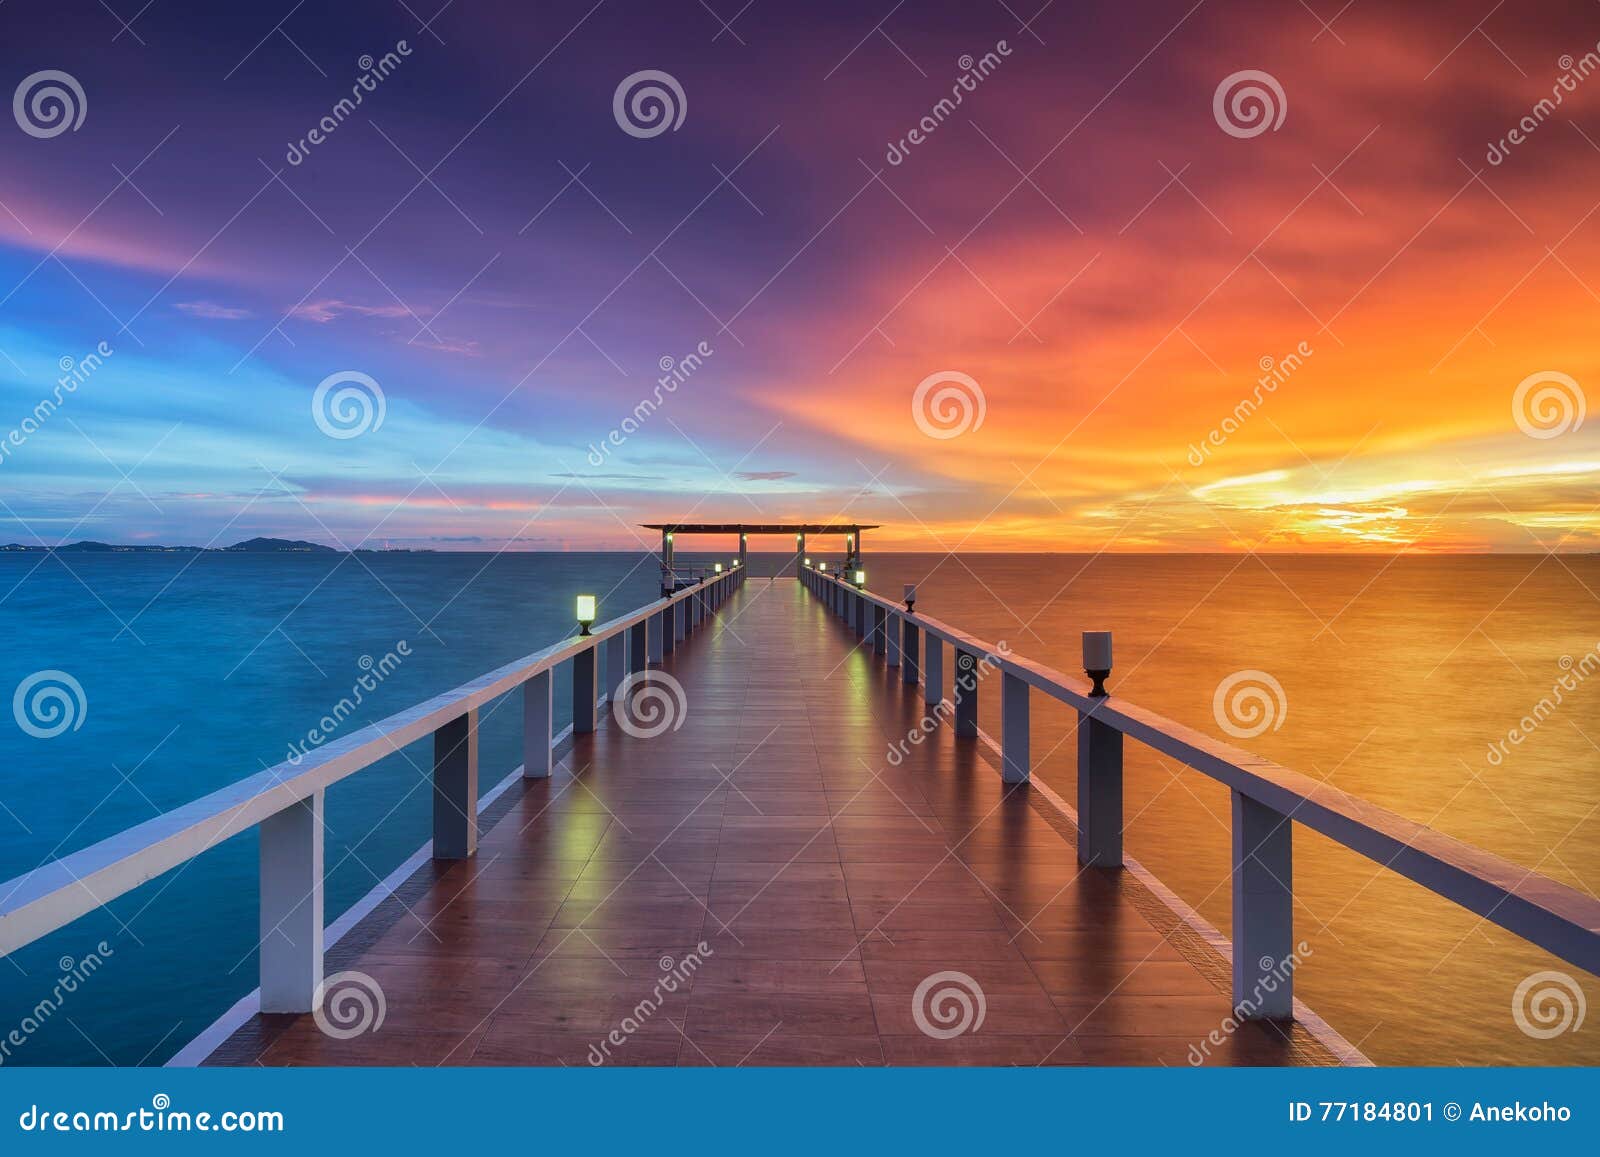 wooden pier between sunset